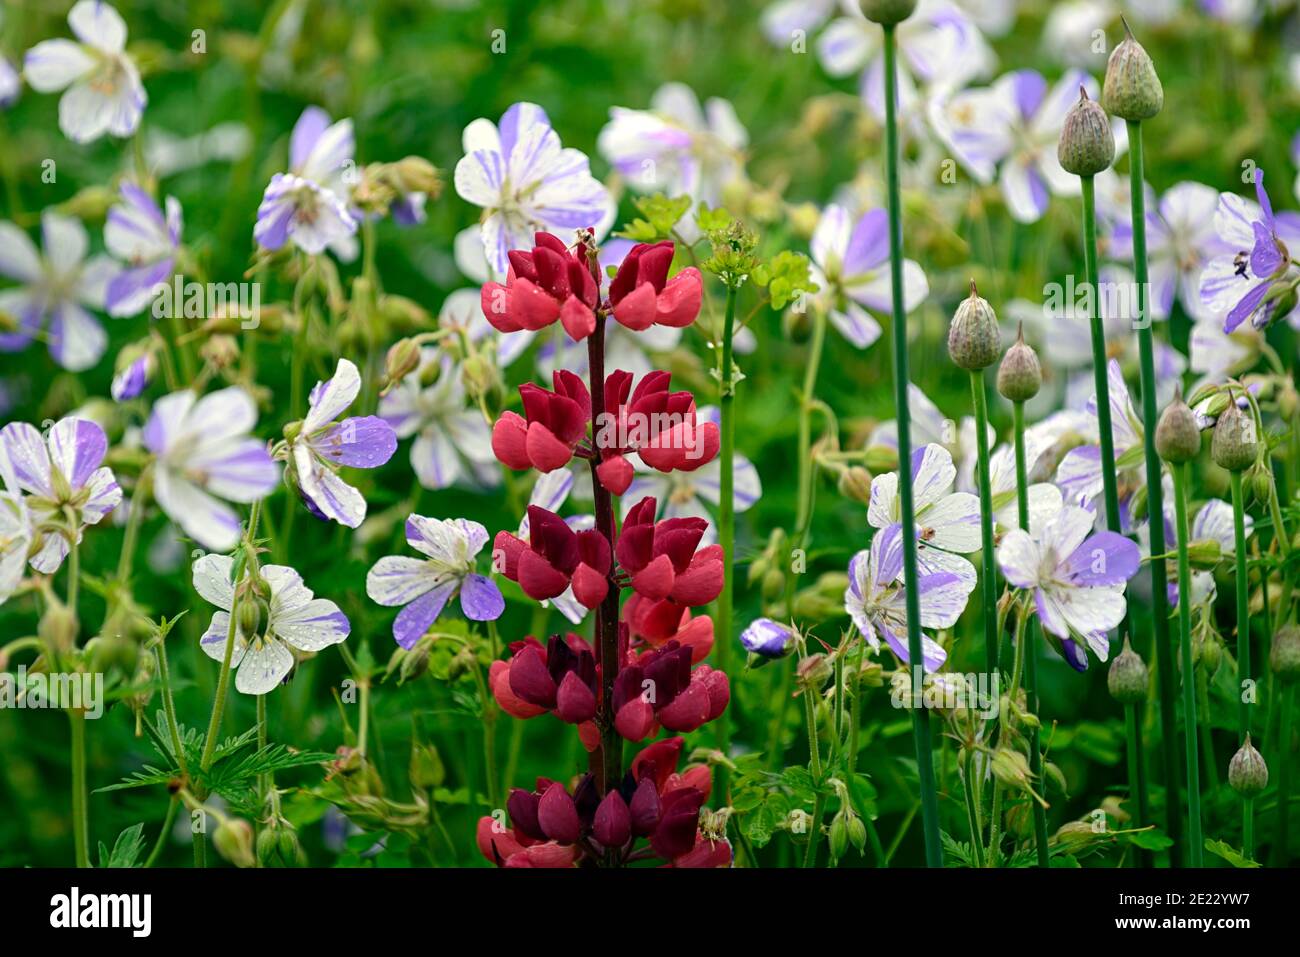 Lupinus Gallery Red,geranium splish splash,lupins and geraniums,red white blue flowers,flower,flowering,mixed planting scheme,RM Floral Stock Photo